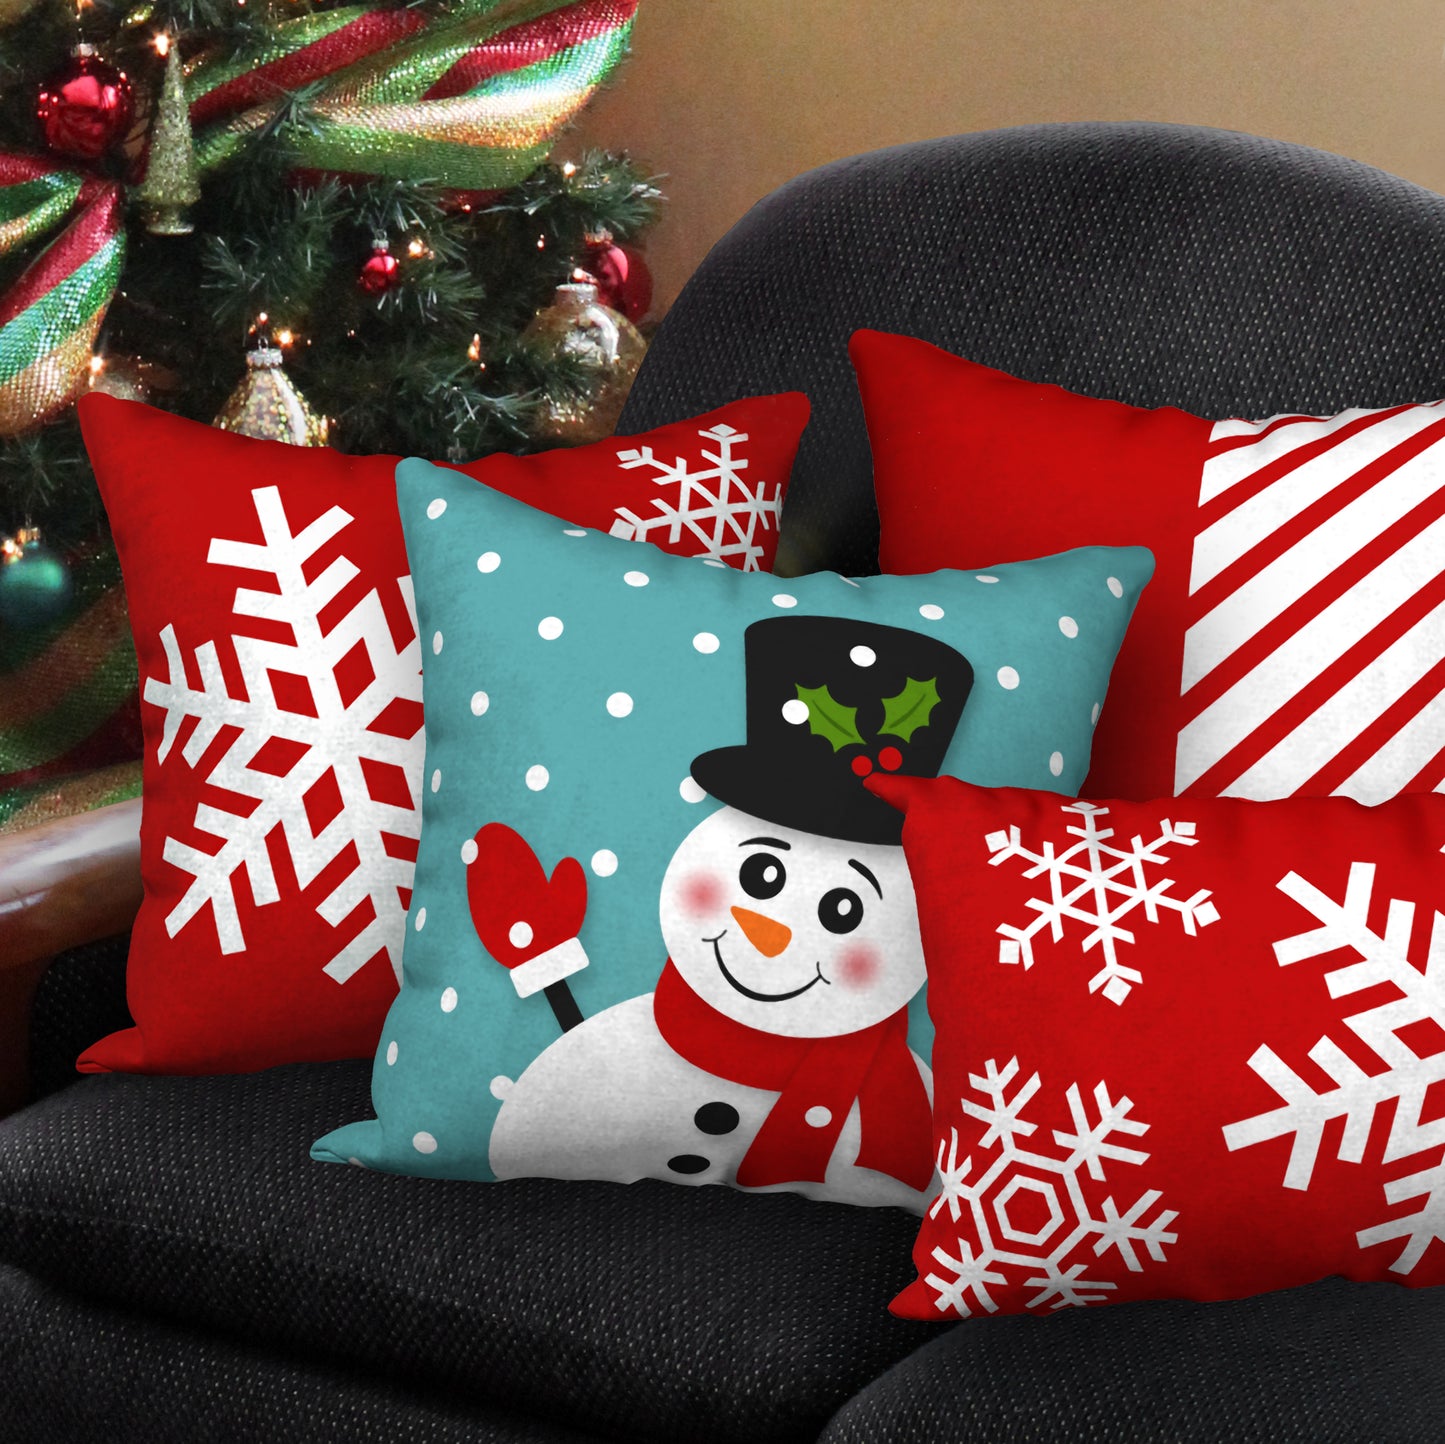 Top Hat Snowman Designer Holiday Pillow, 18"x18"